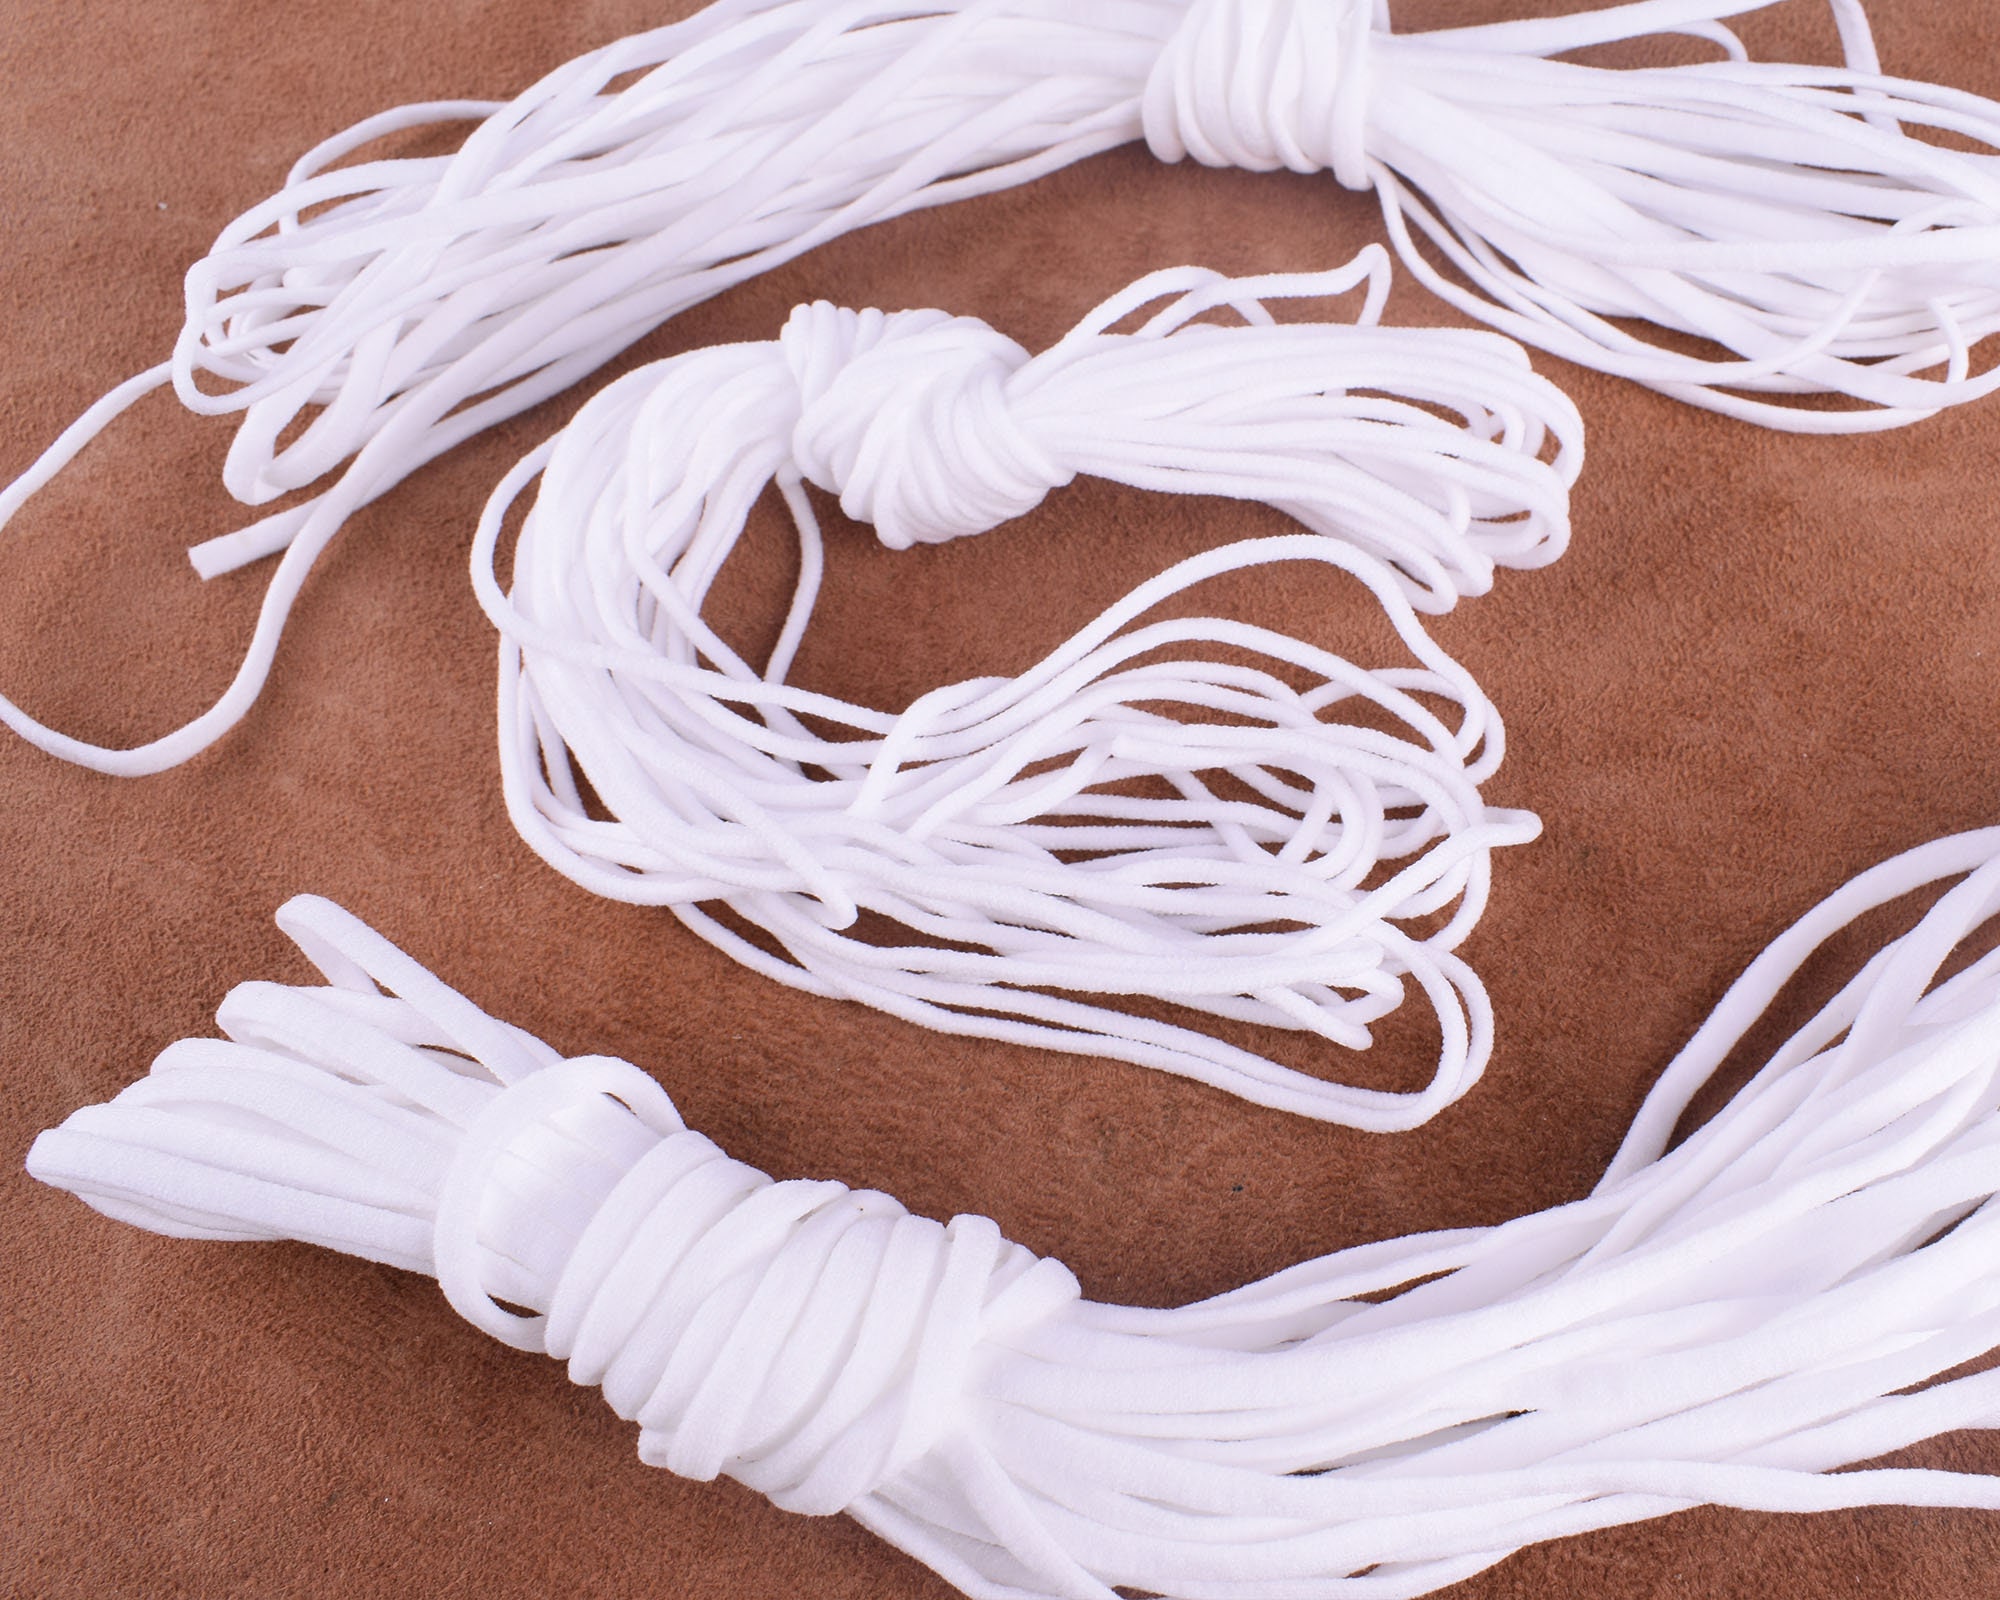 10 Yard Elastic String 2mm Elastic Band Elastic Cord Earloop Elastic Cord  for Sewing,for Masks Handmade Elastic Bands,white Elastic Rope 